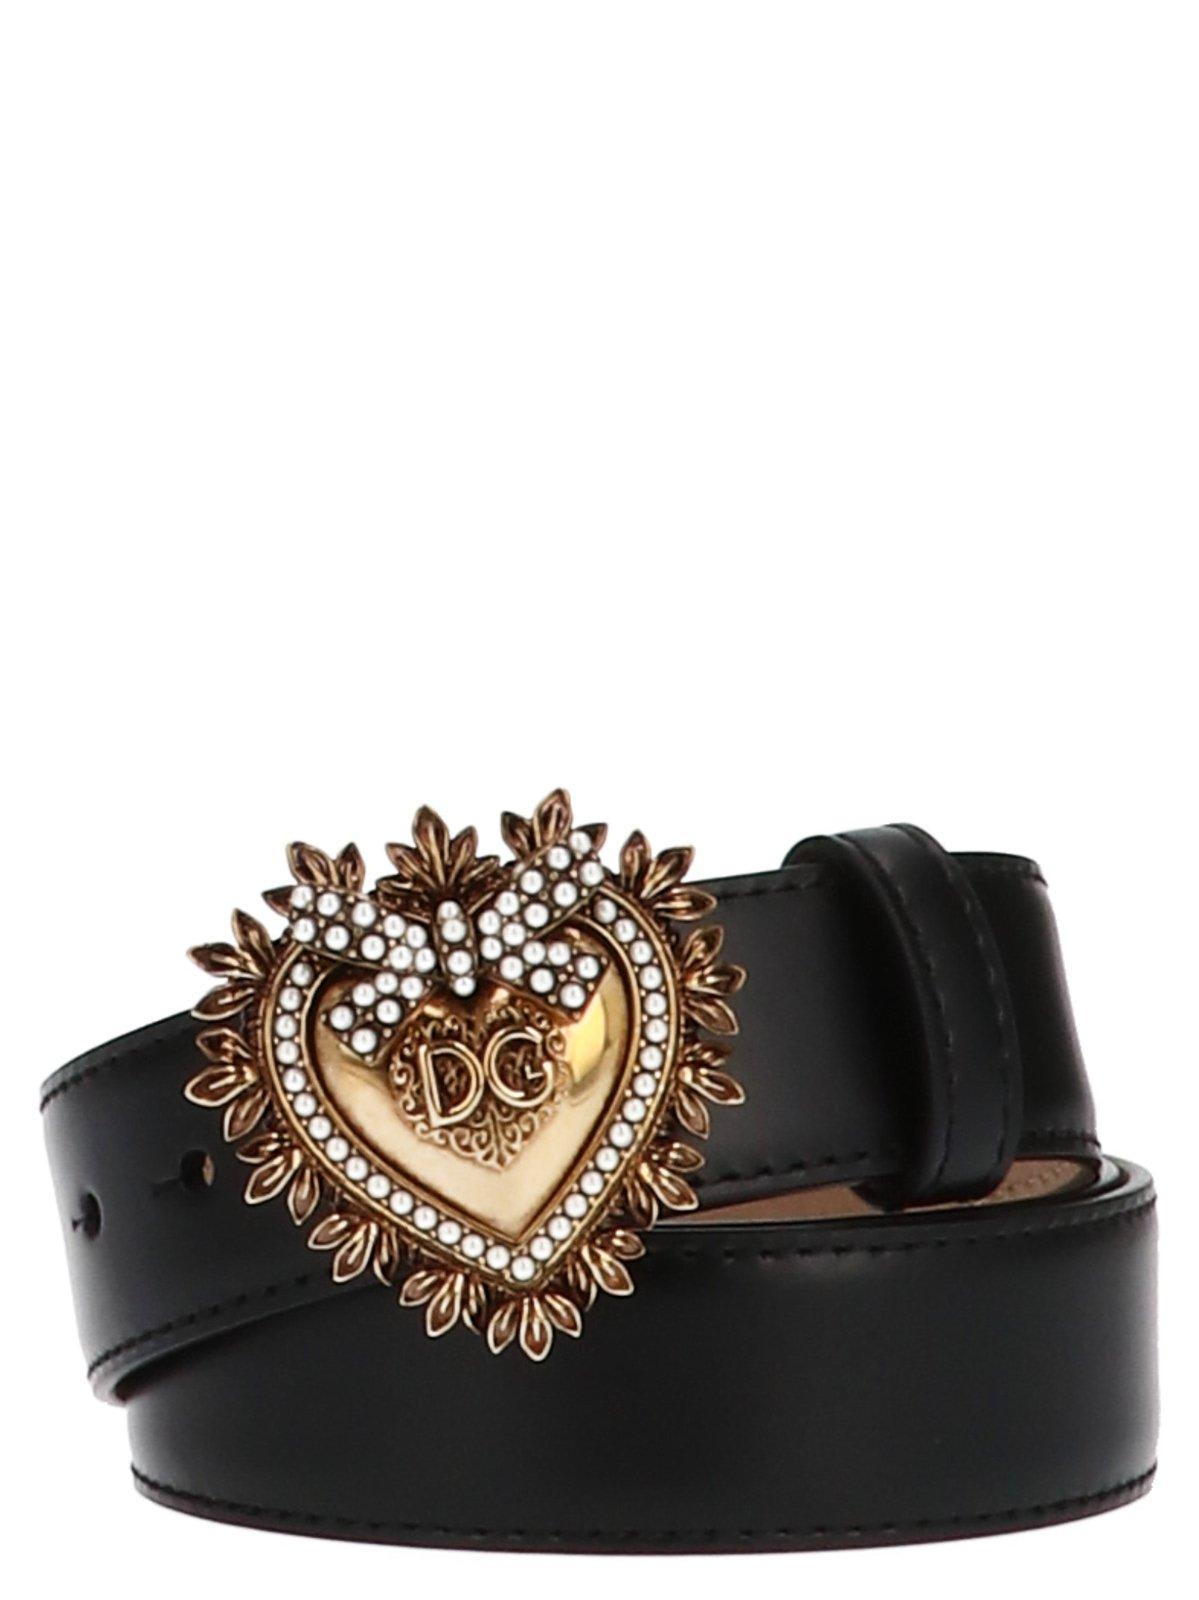 Shop Dolce & Gabbana Devotion Buckle Belt